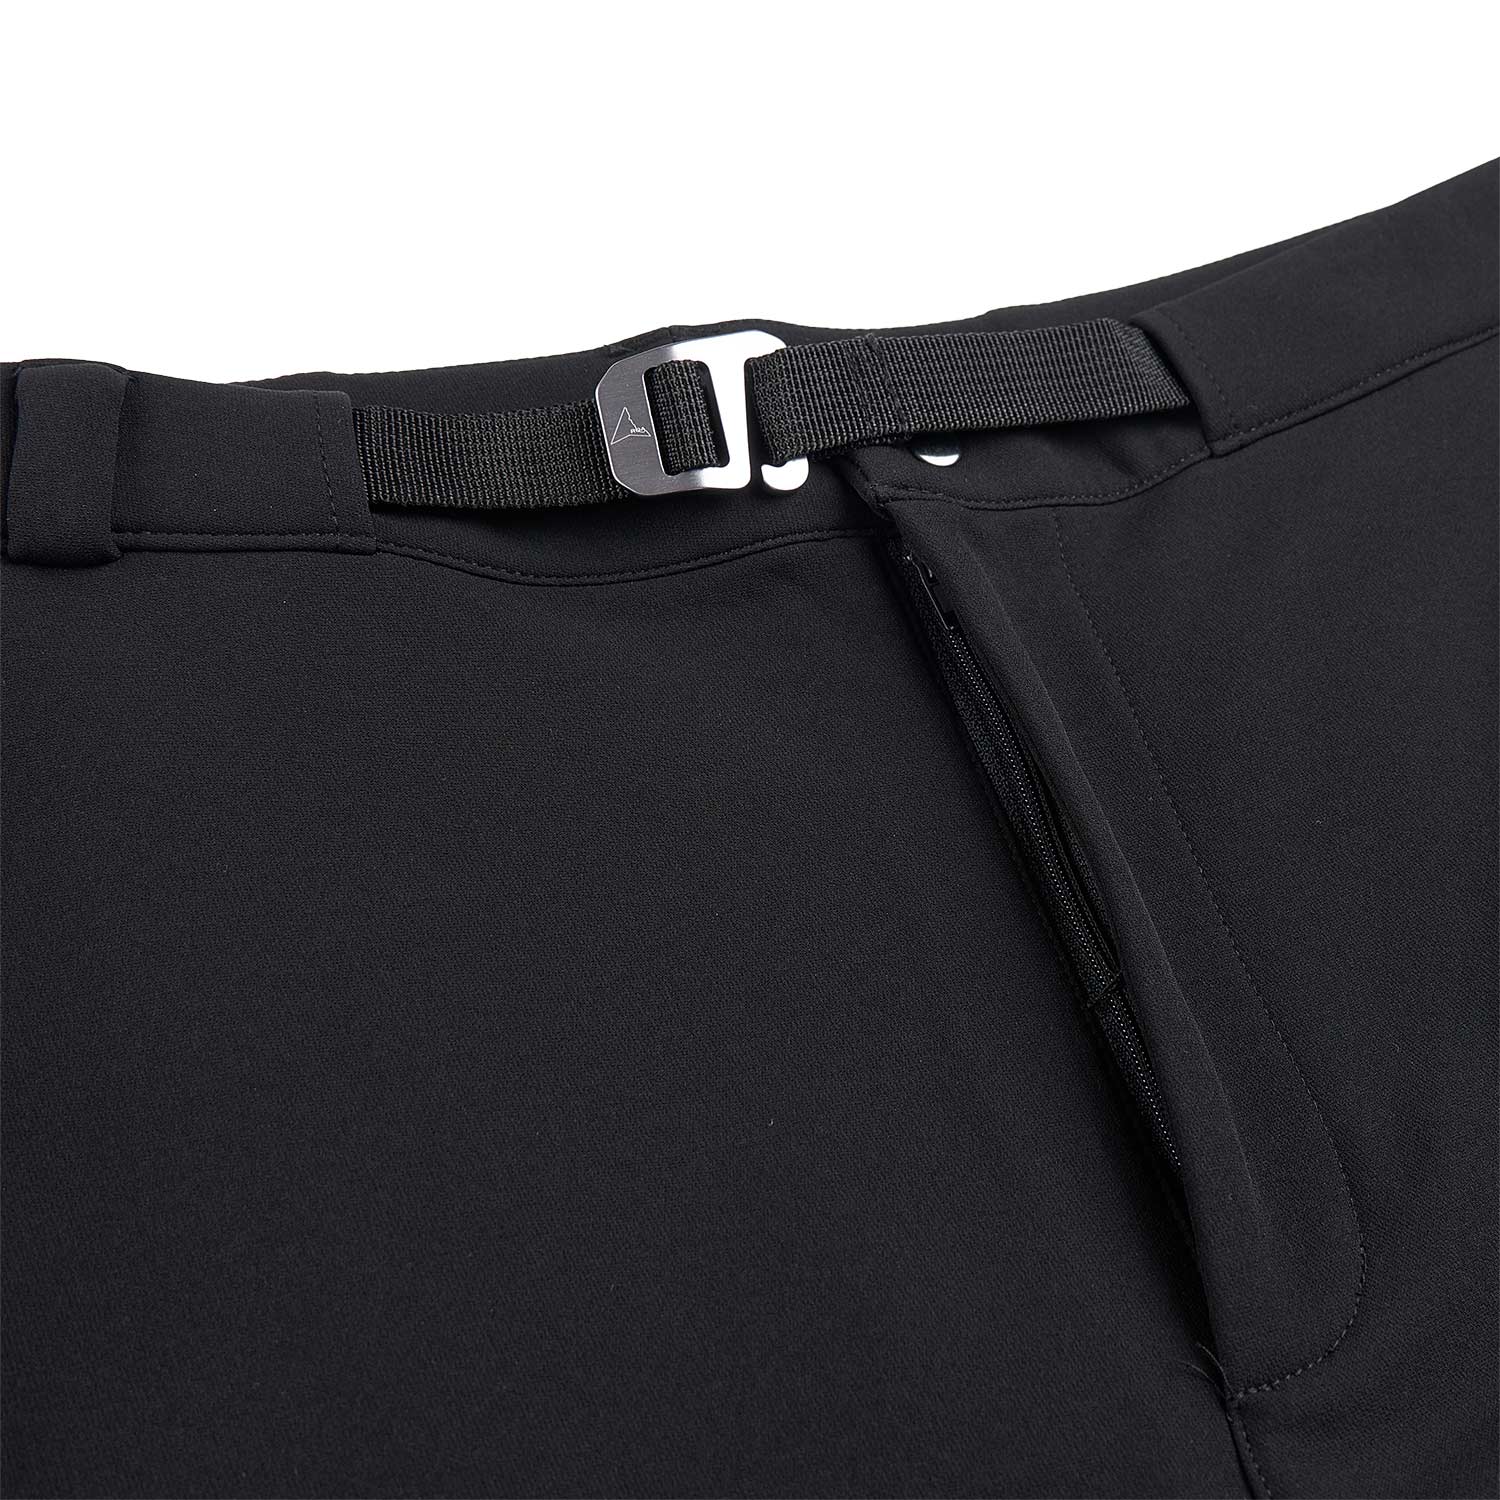 roa technical trousers softshell (black) - rbmw020fa08 - a.plus